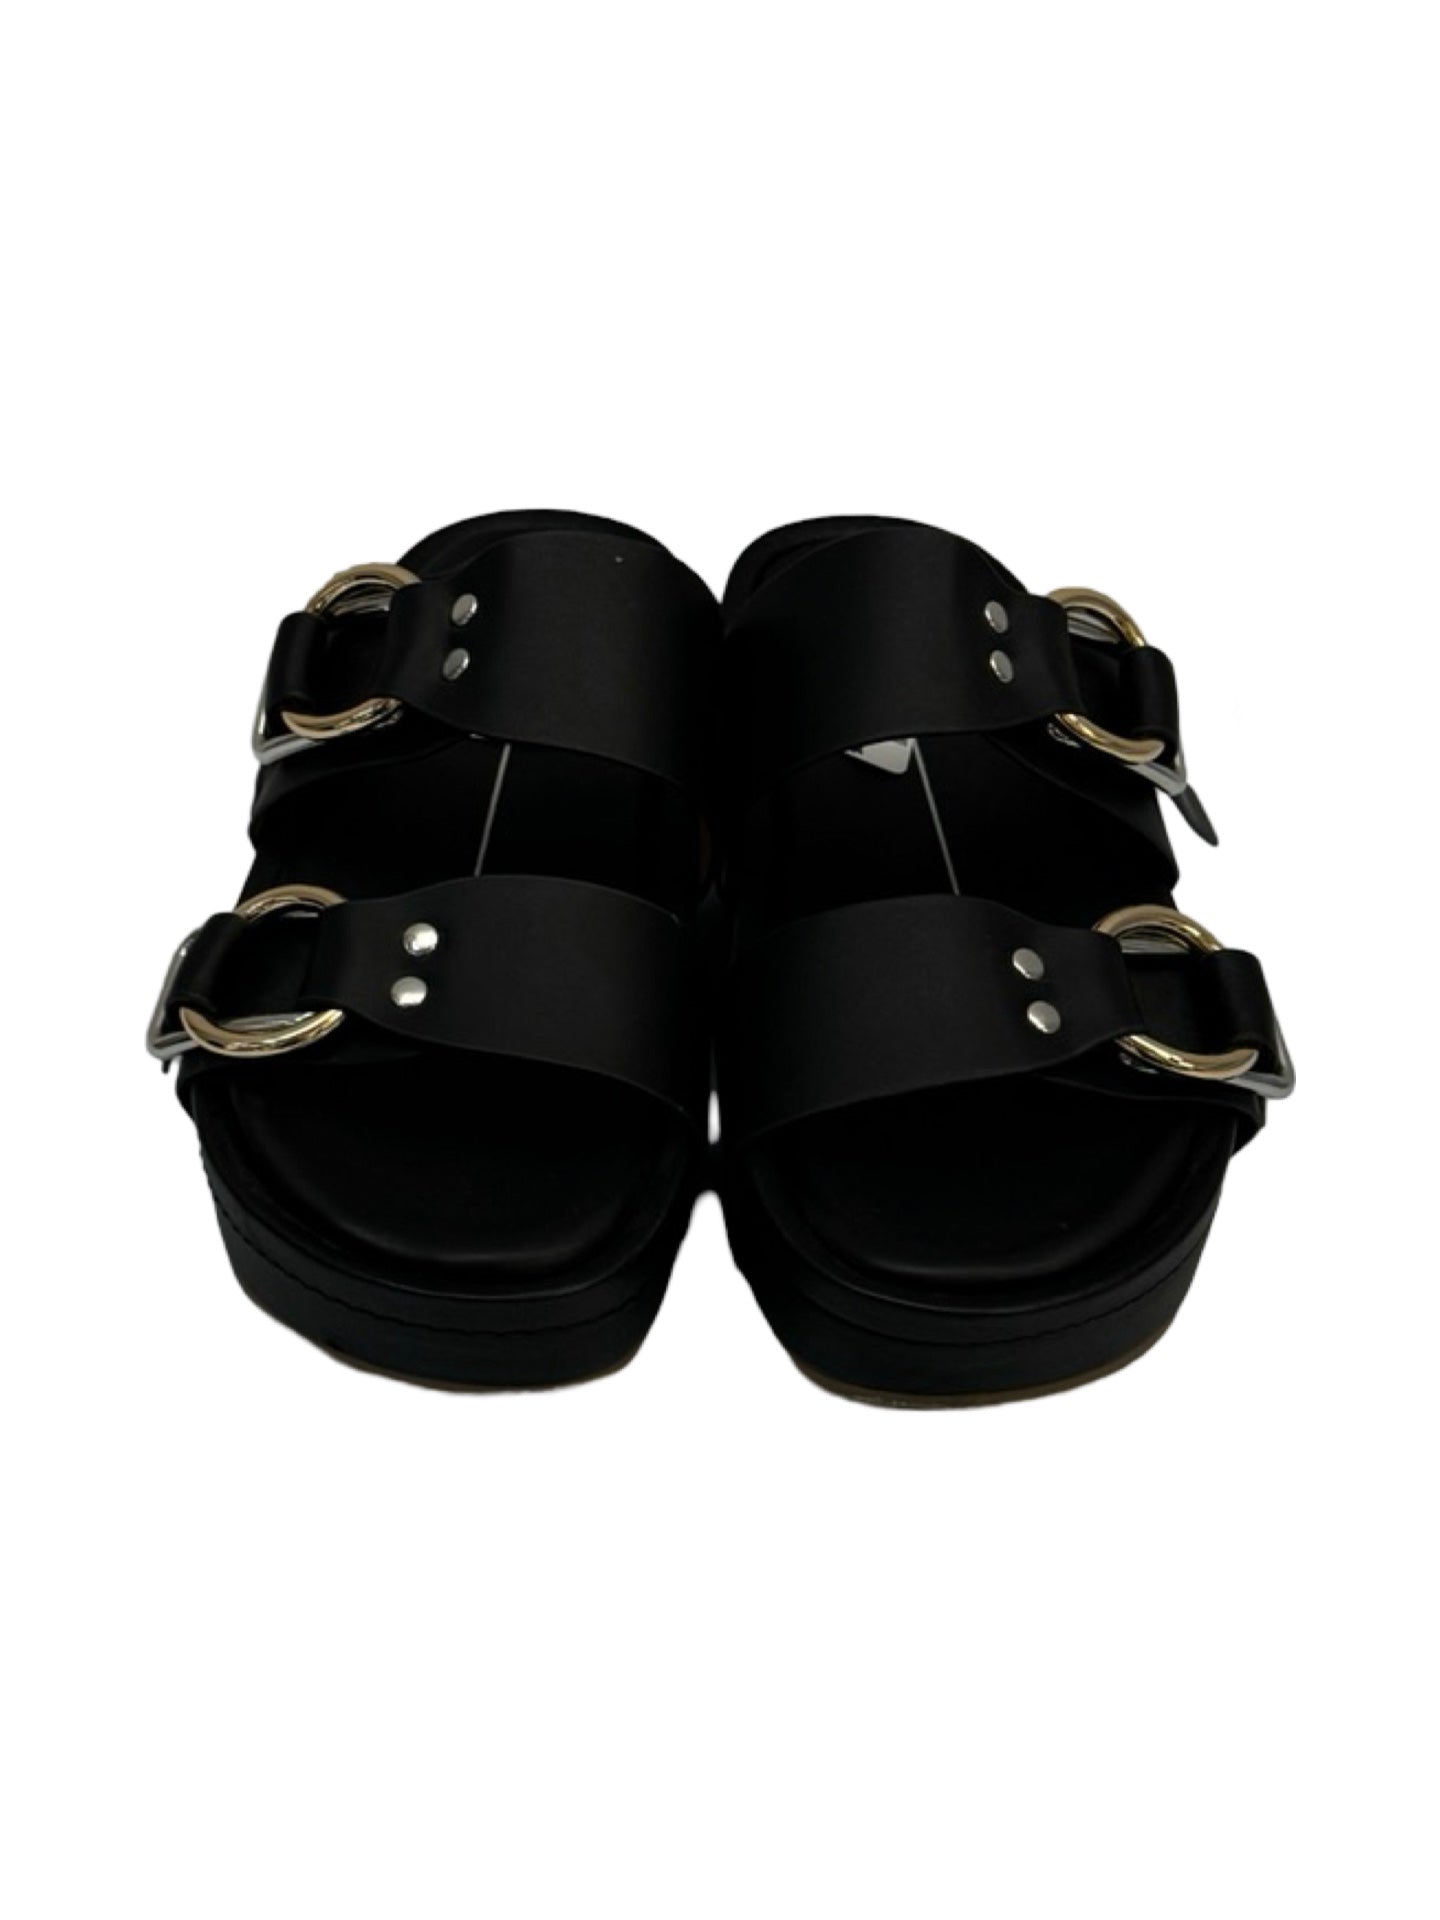 Black Shoes Flats Dolce Vita, Size 6.5